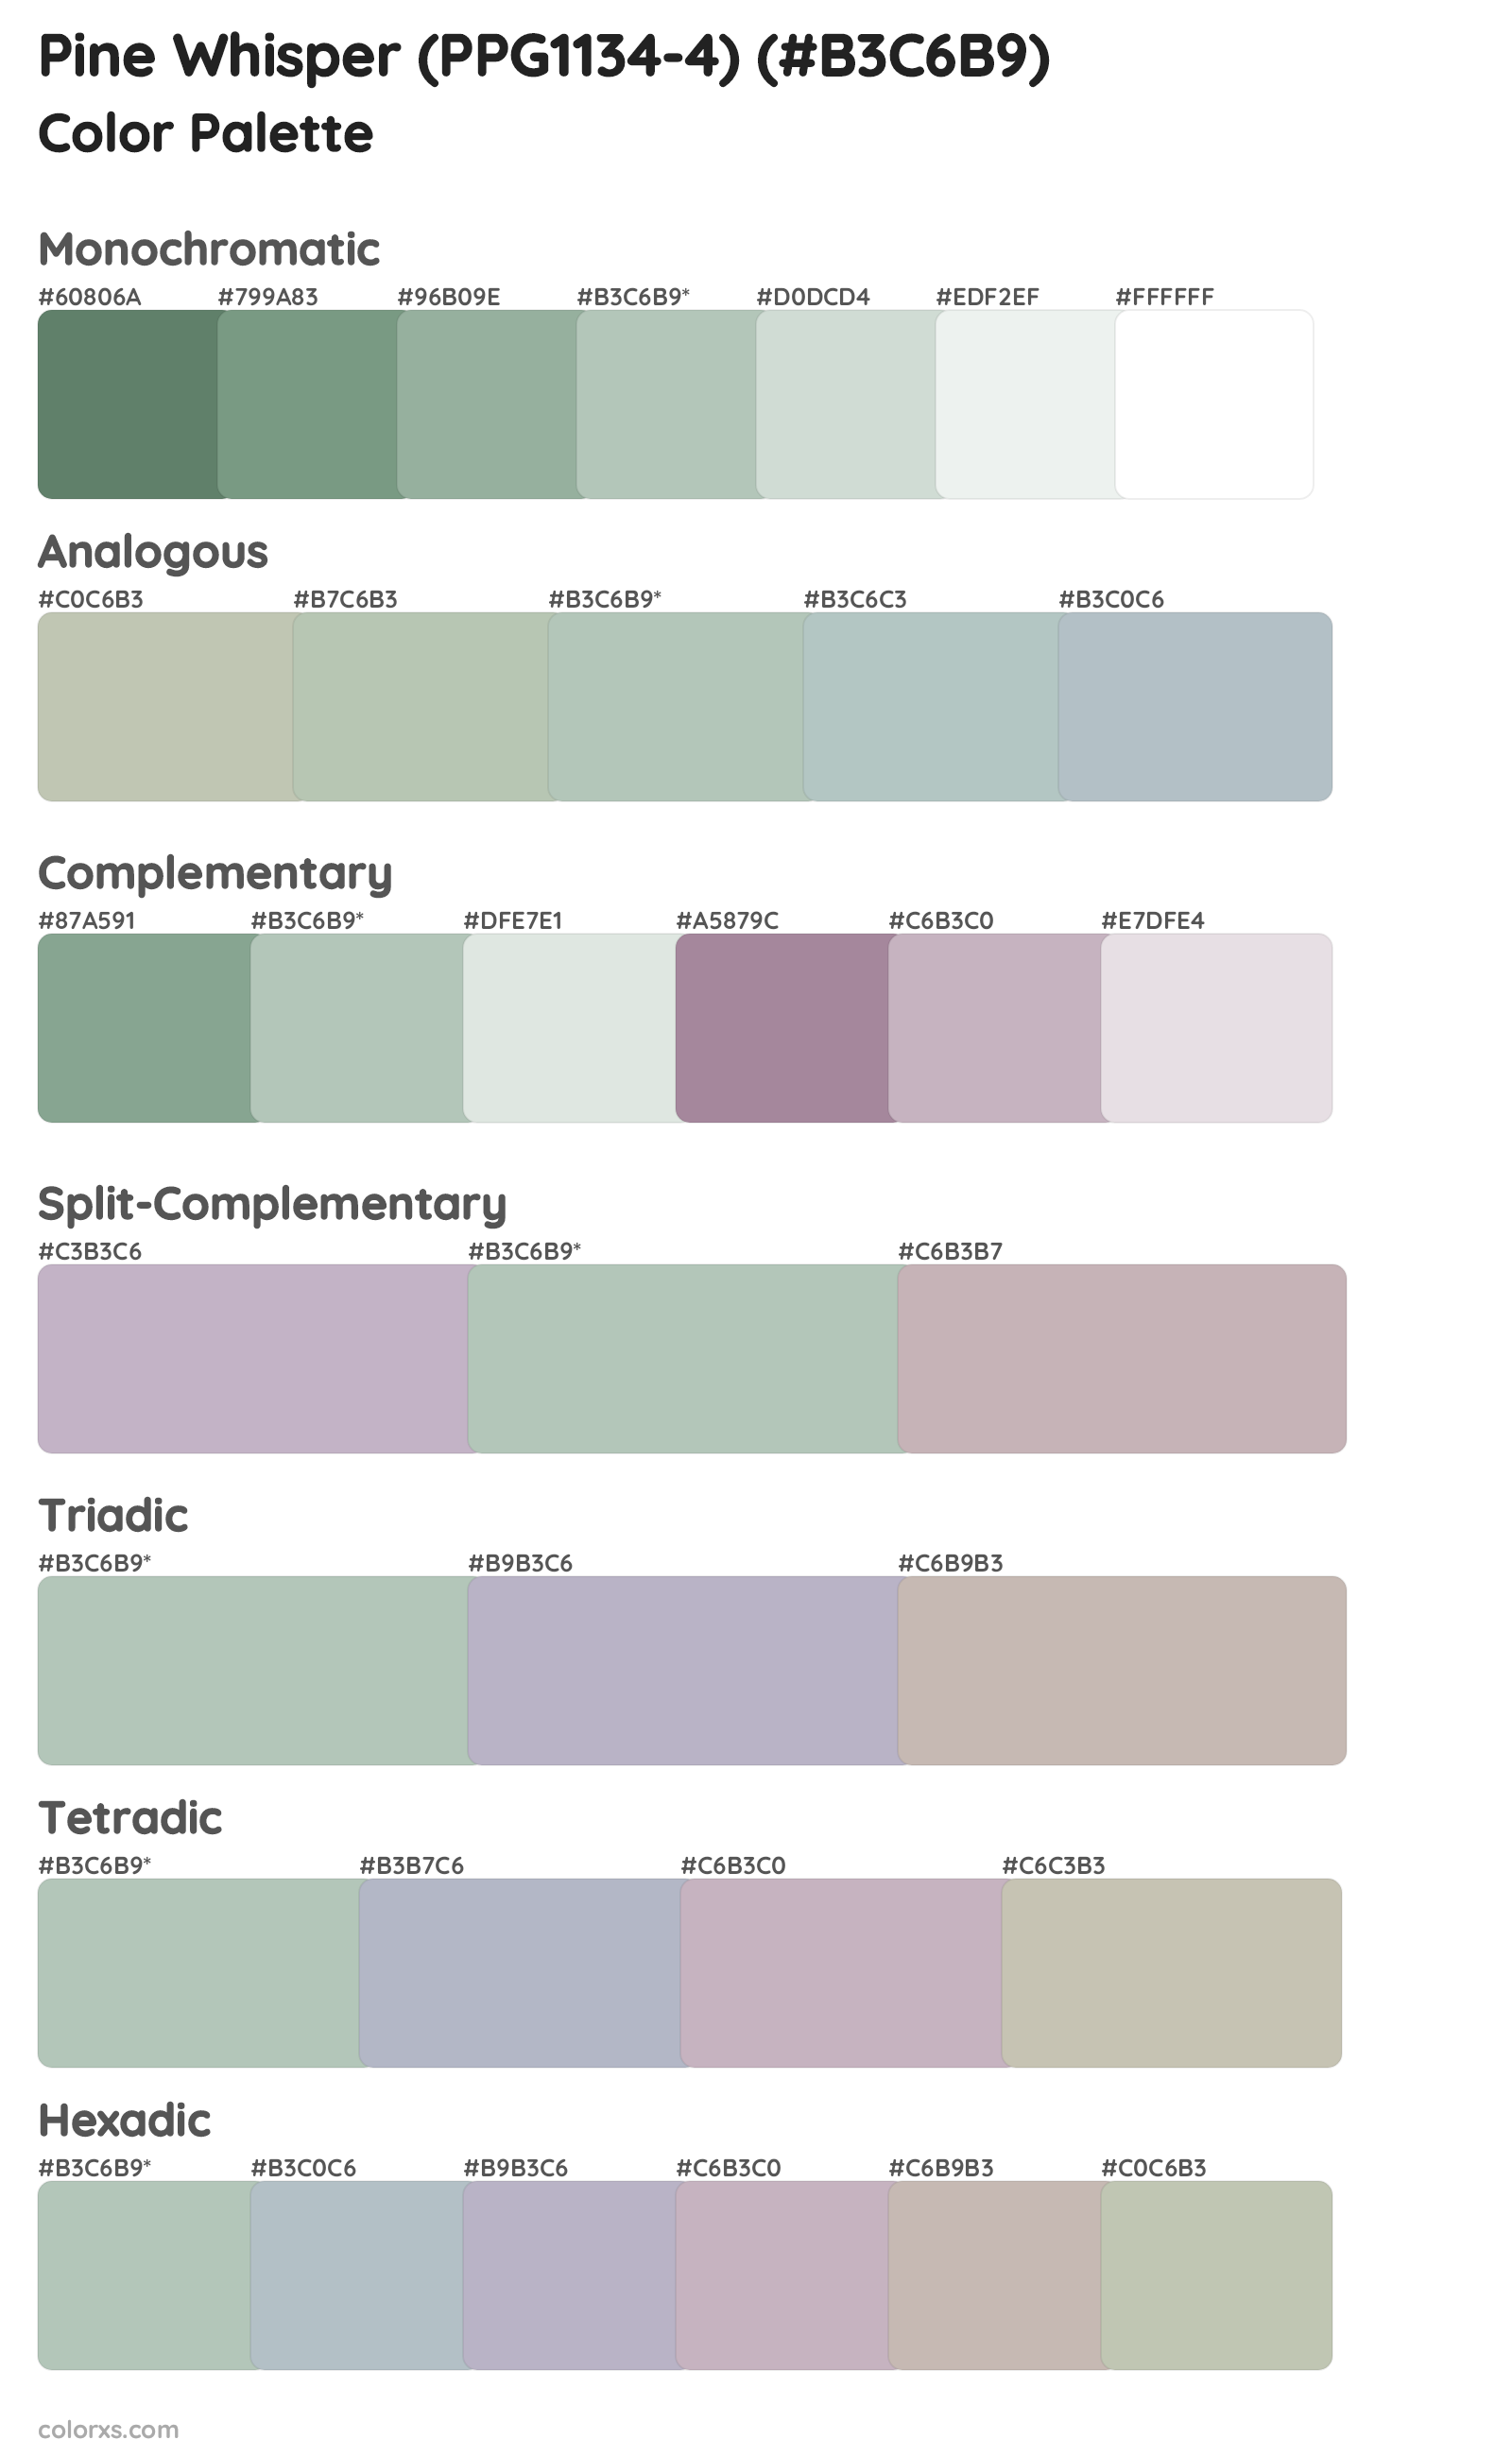 Pine Whisper (PPG1134-4) Color Scheme Palettes